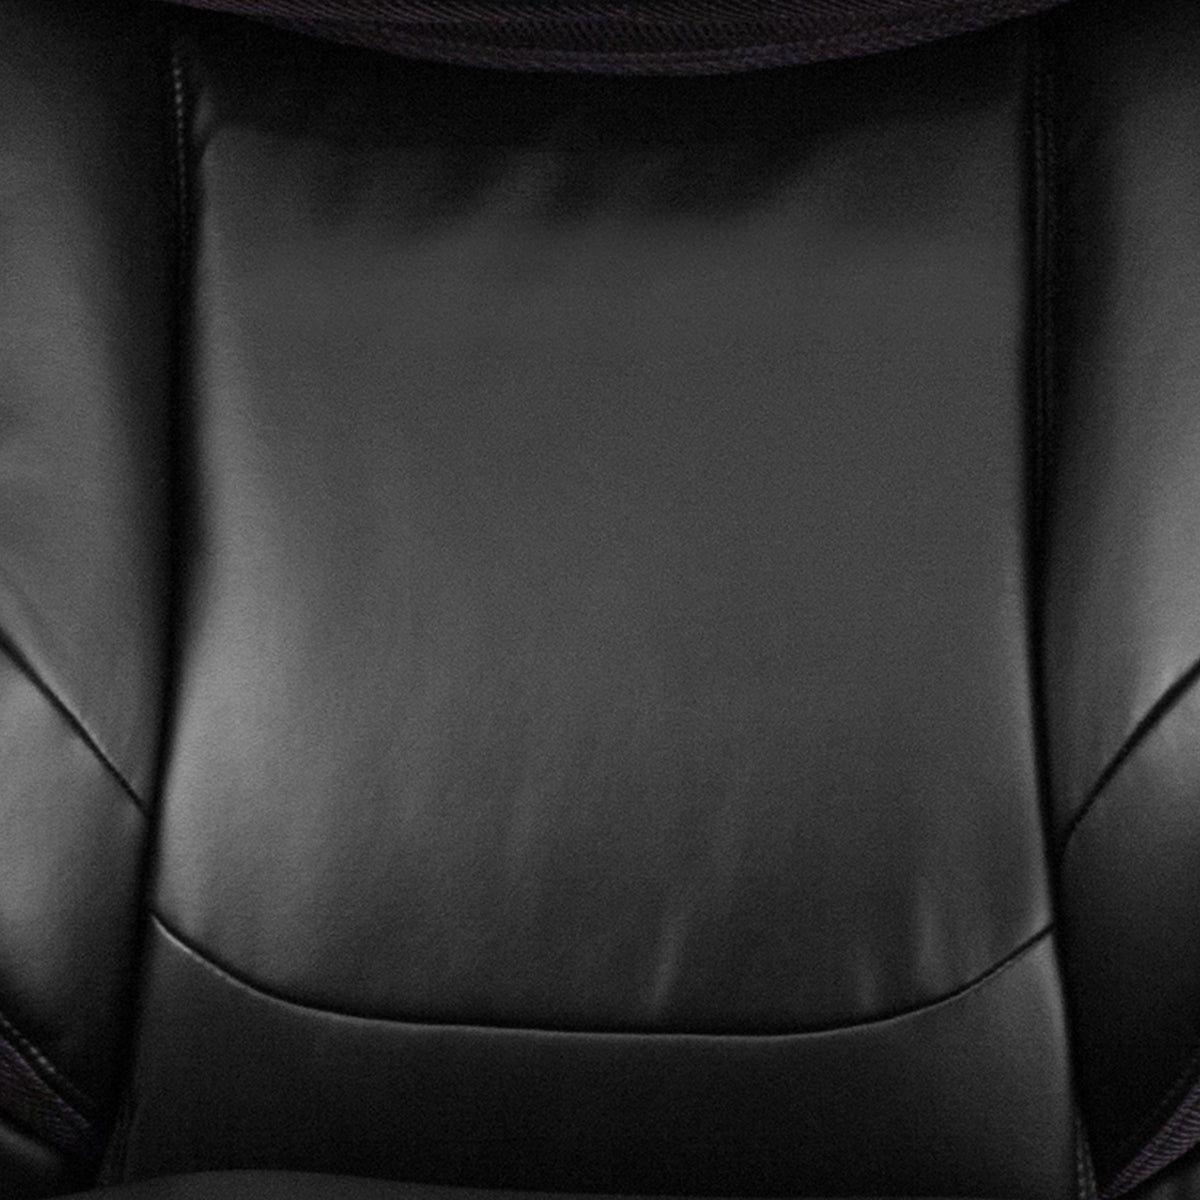 Black |#| Big & Tall 500 lb. Rated Black LeatherSoft Ergonomic Chair w/Adjustable Headrest